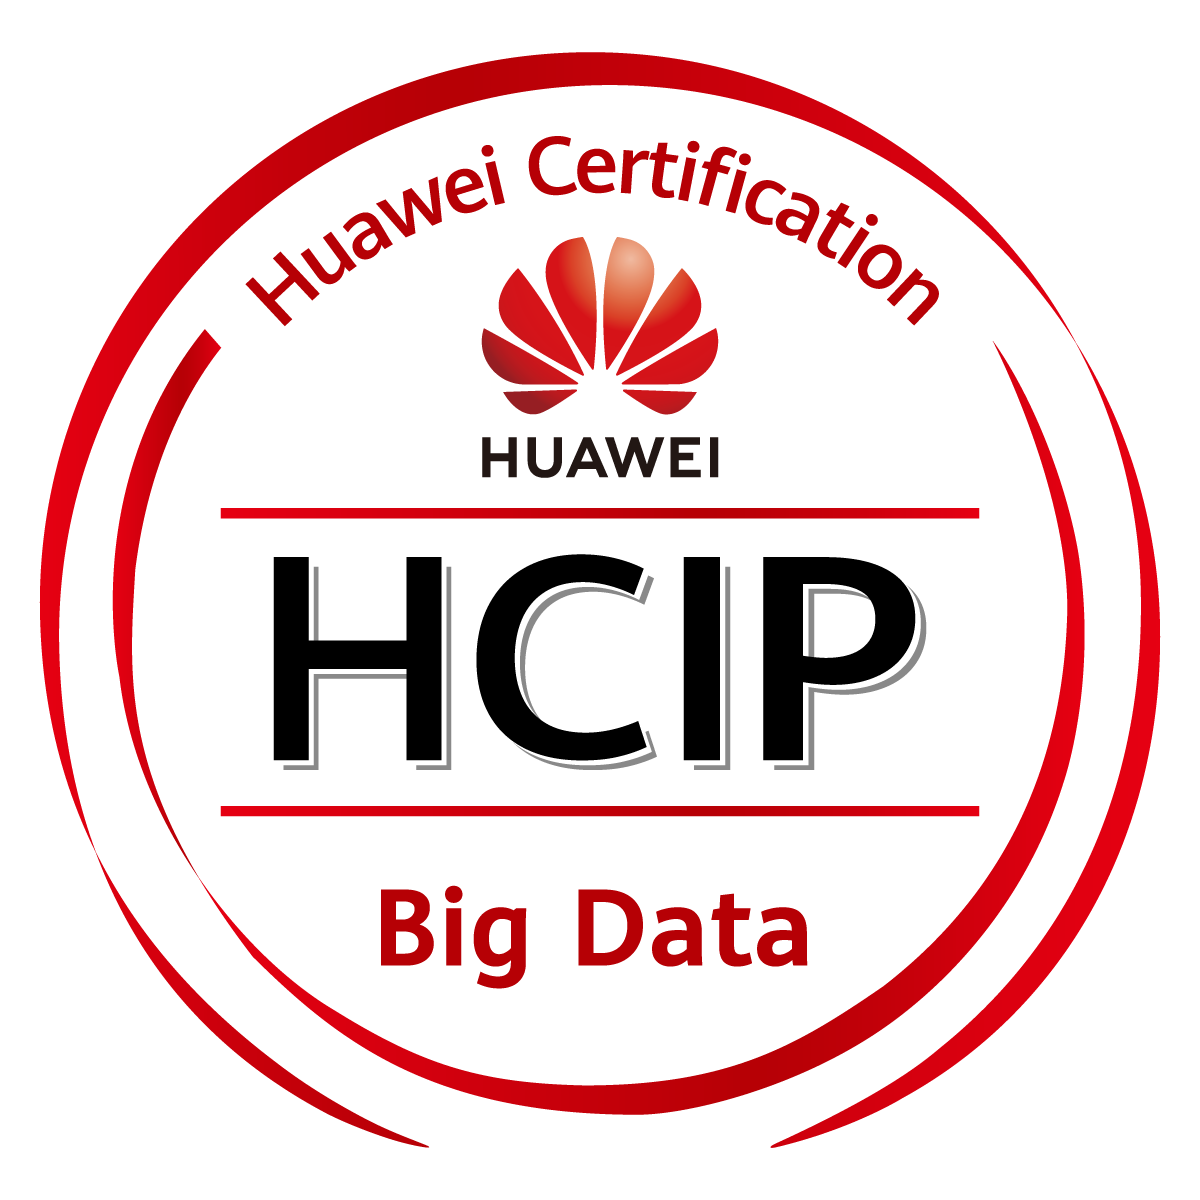 HCIP-Big Data Operation & Maintenance